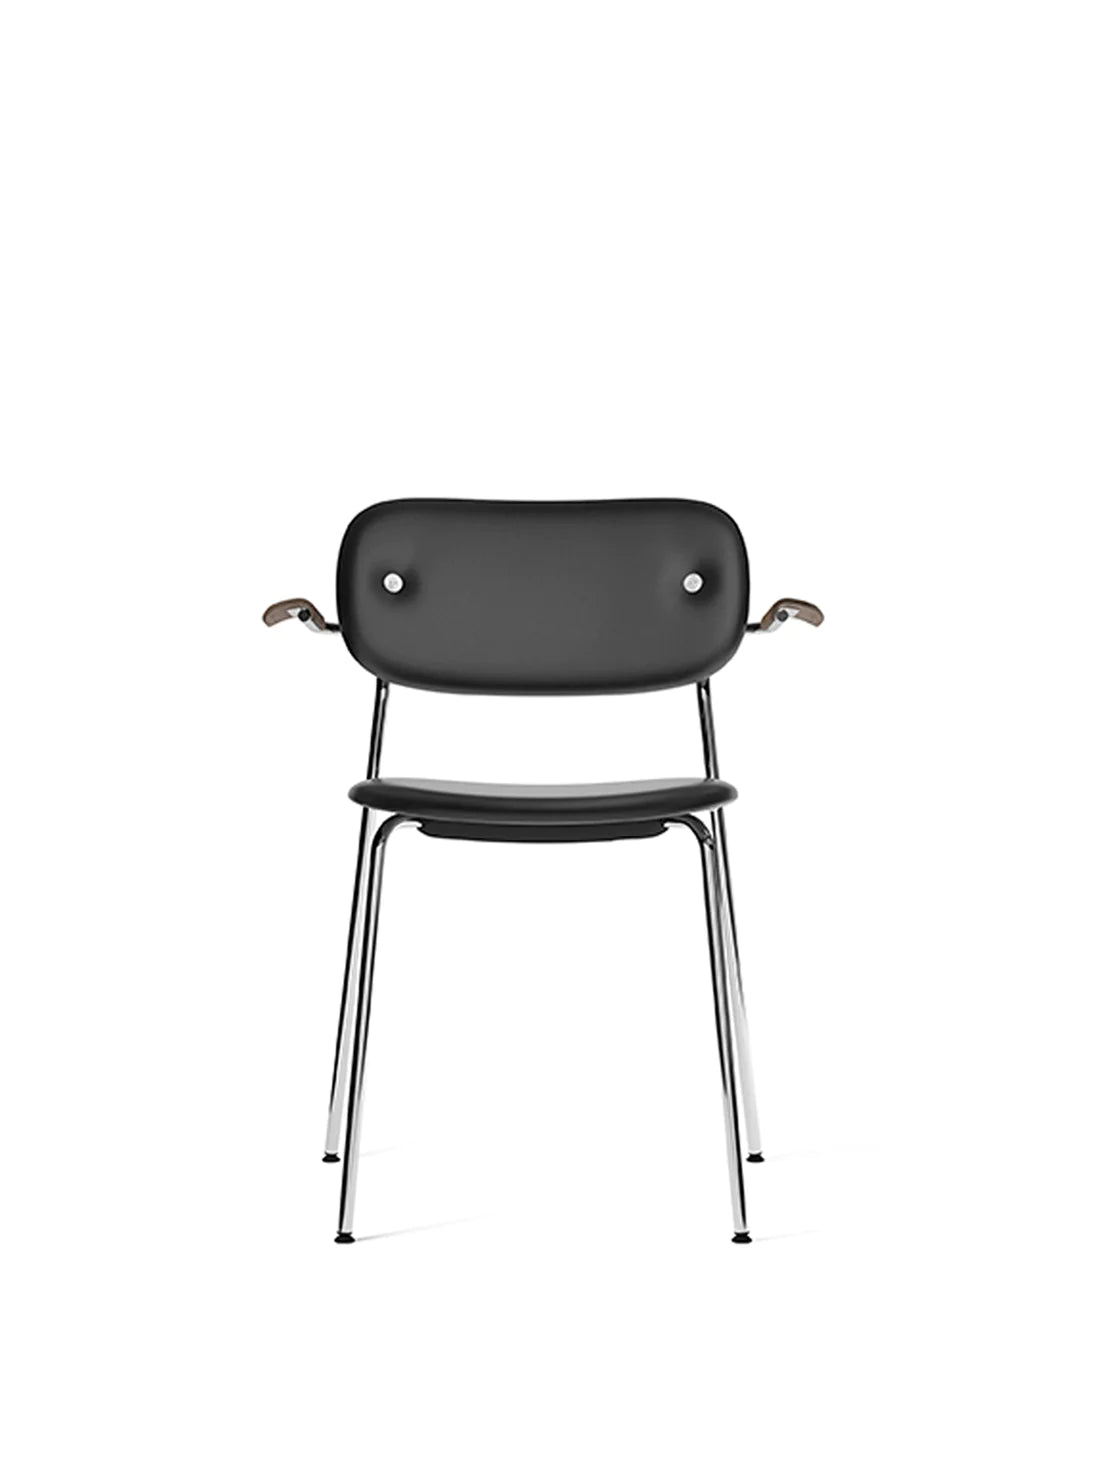 Co Dining Chair, Fully Upholstered With Armrest, Chrome Frame